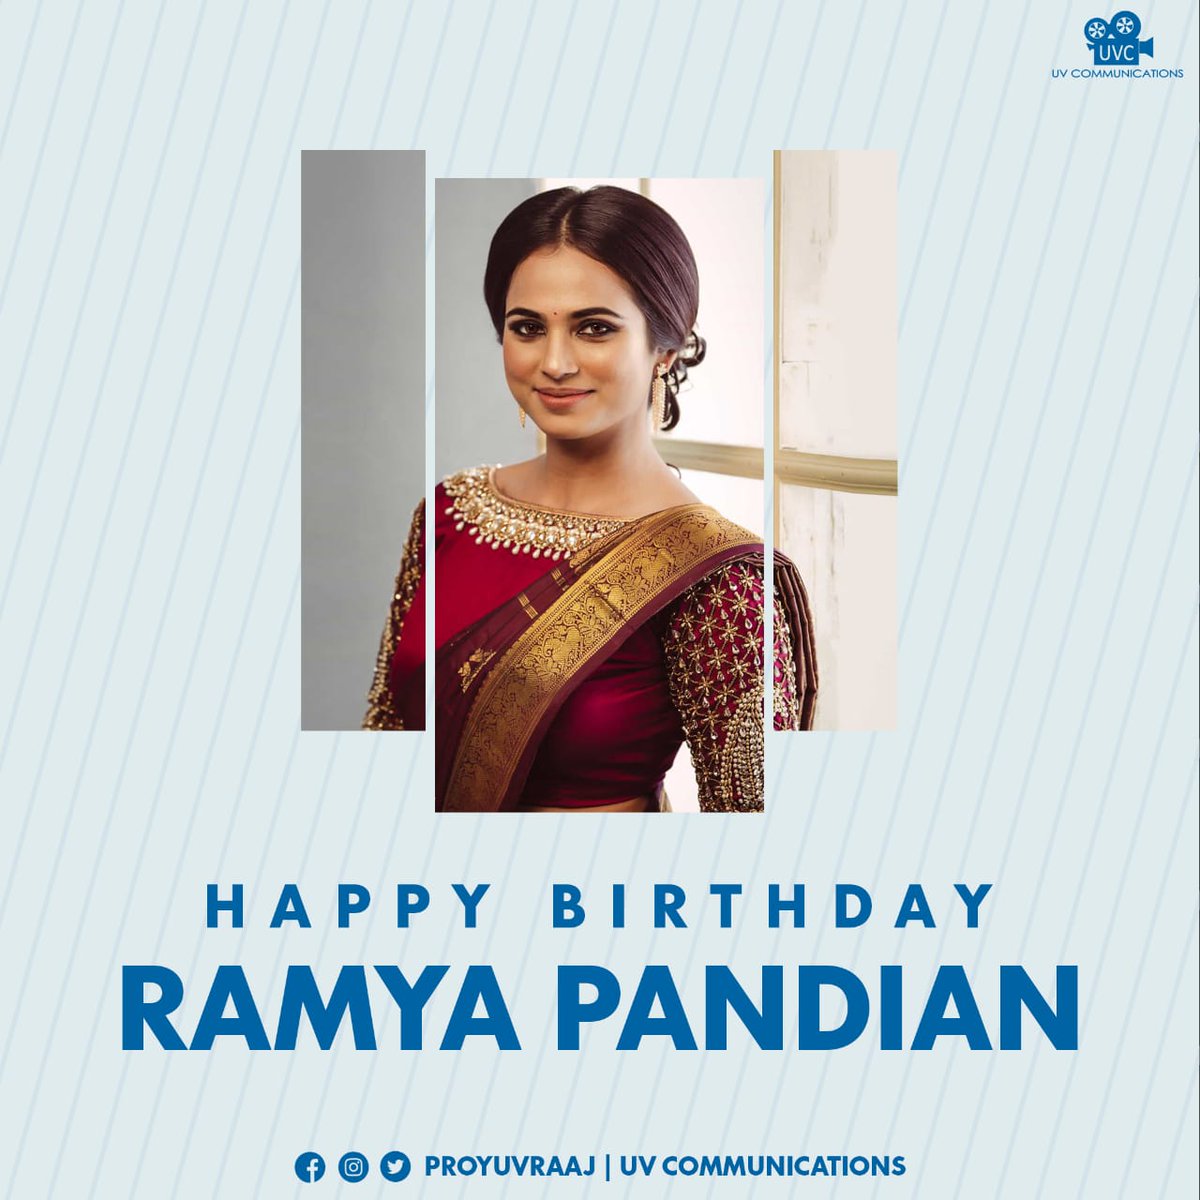 RT @UVCommunication: Wishing Actress @iamramyapandian mam a very Happy Birthday! 

#HBDRamyaPandian https://t.co/1rAd1m6ZXx